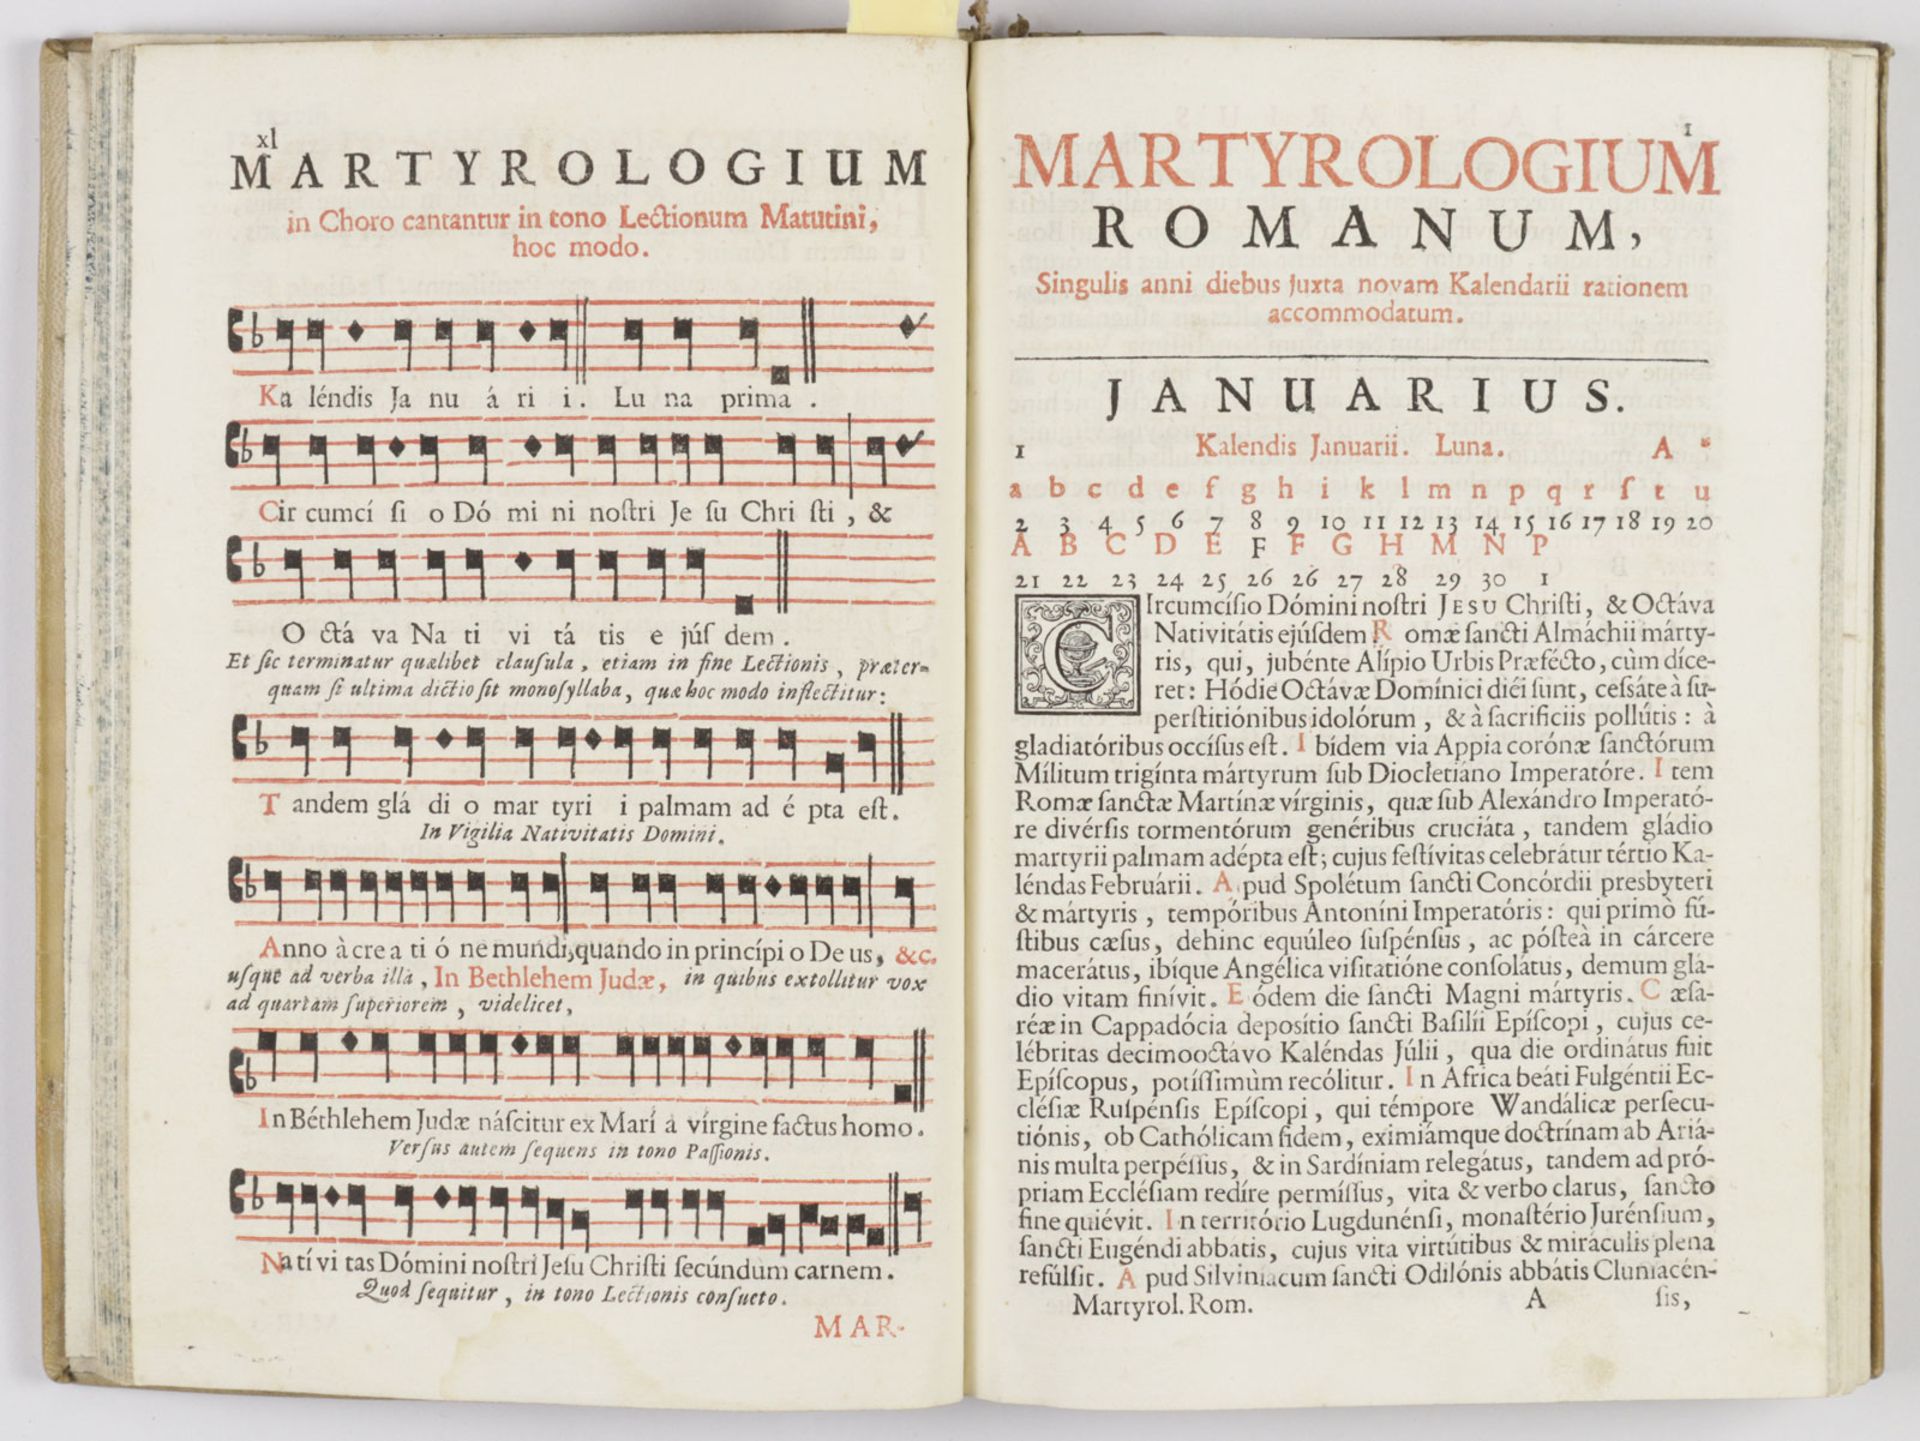 Martyrologium Romanum Gregorii XIII - Image 2 of 7